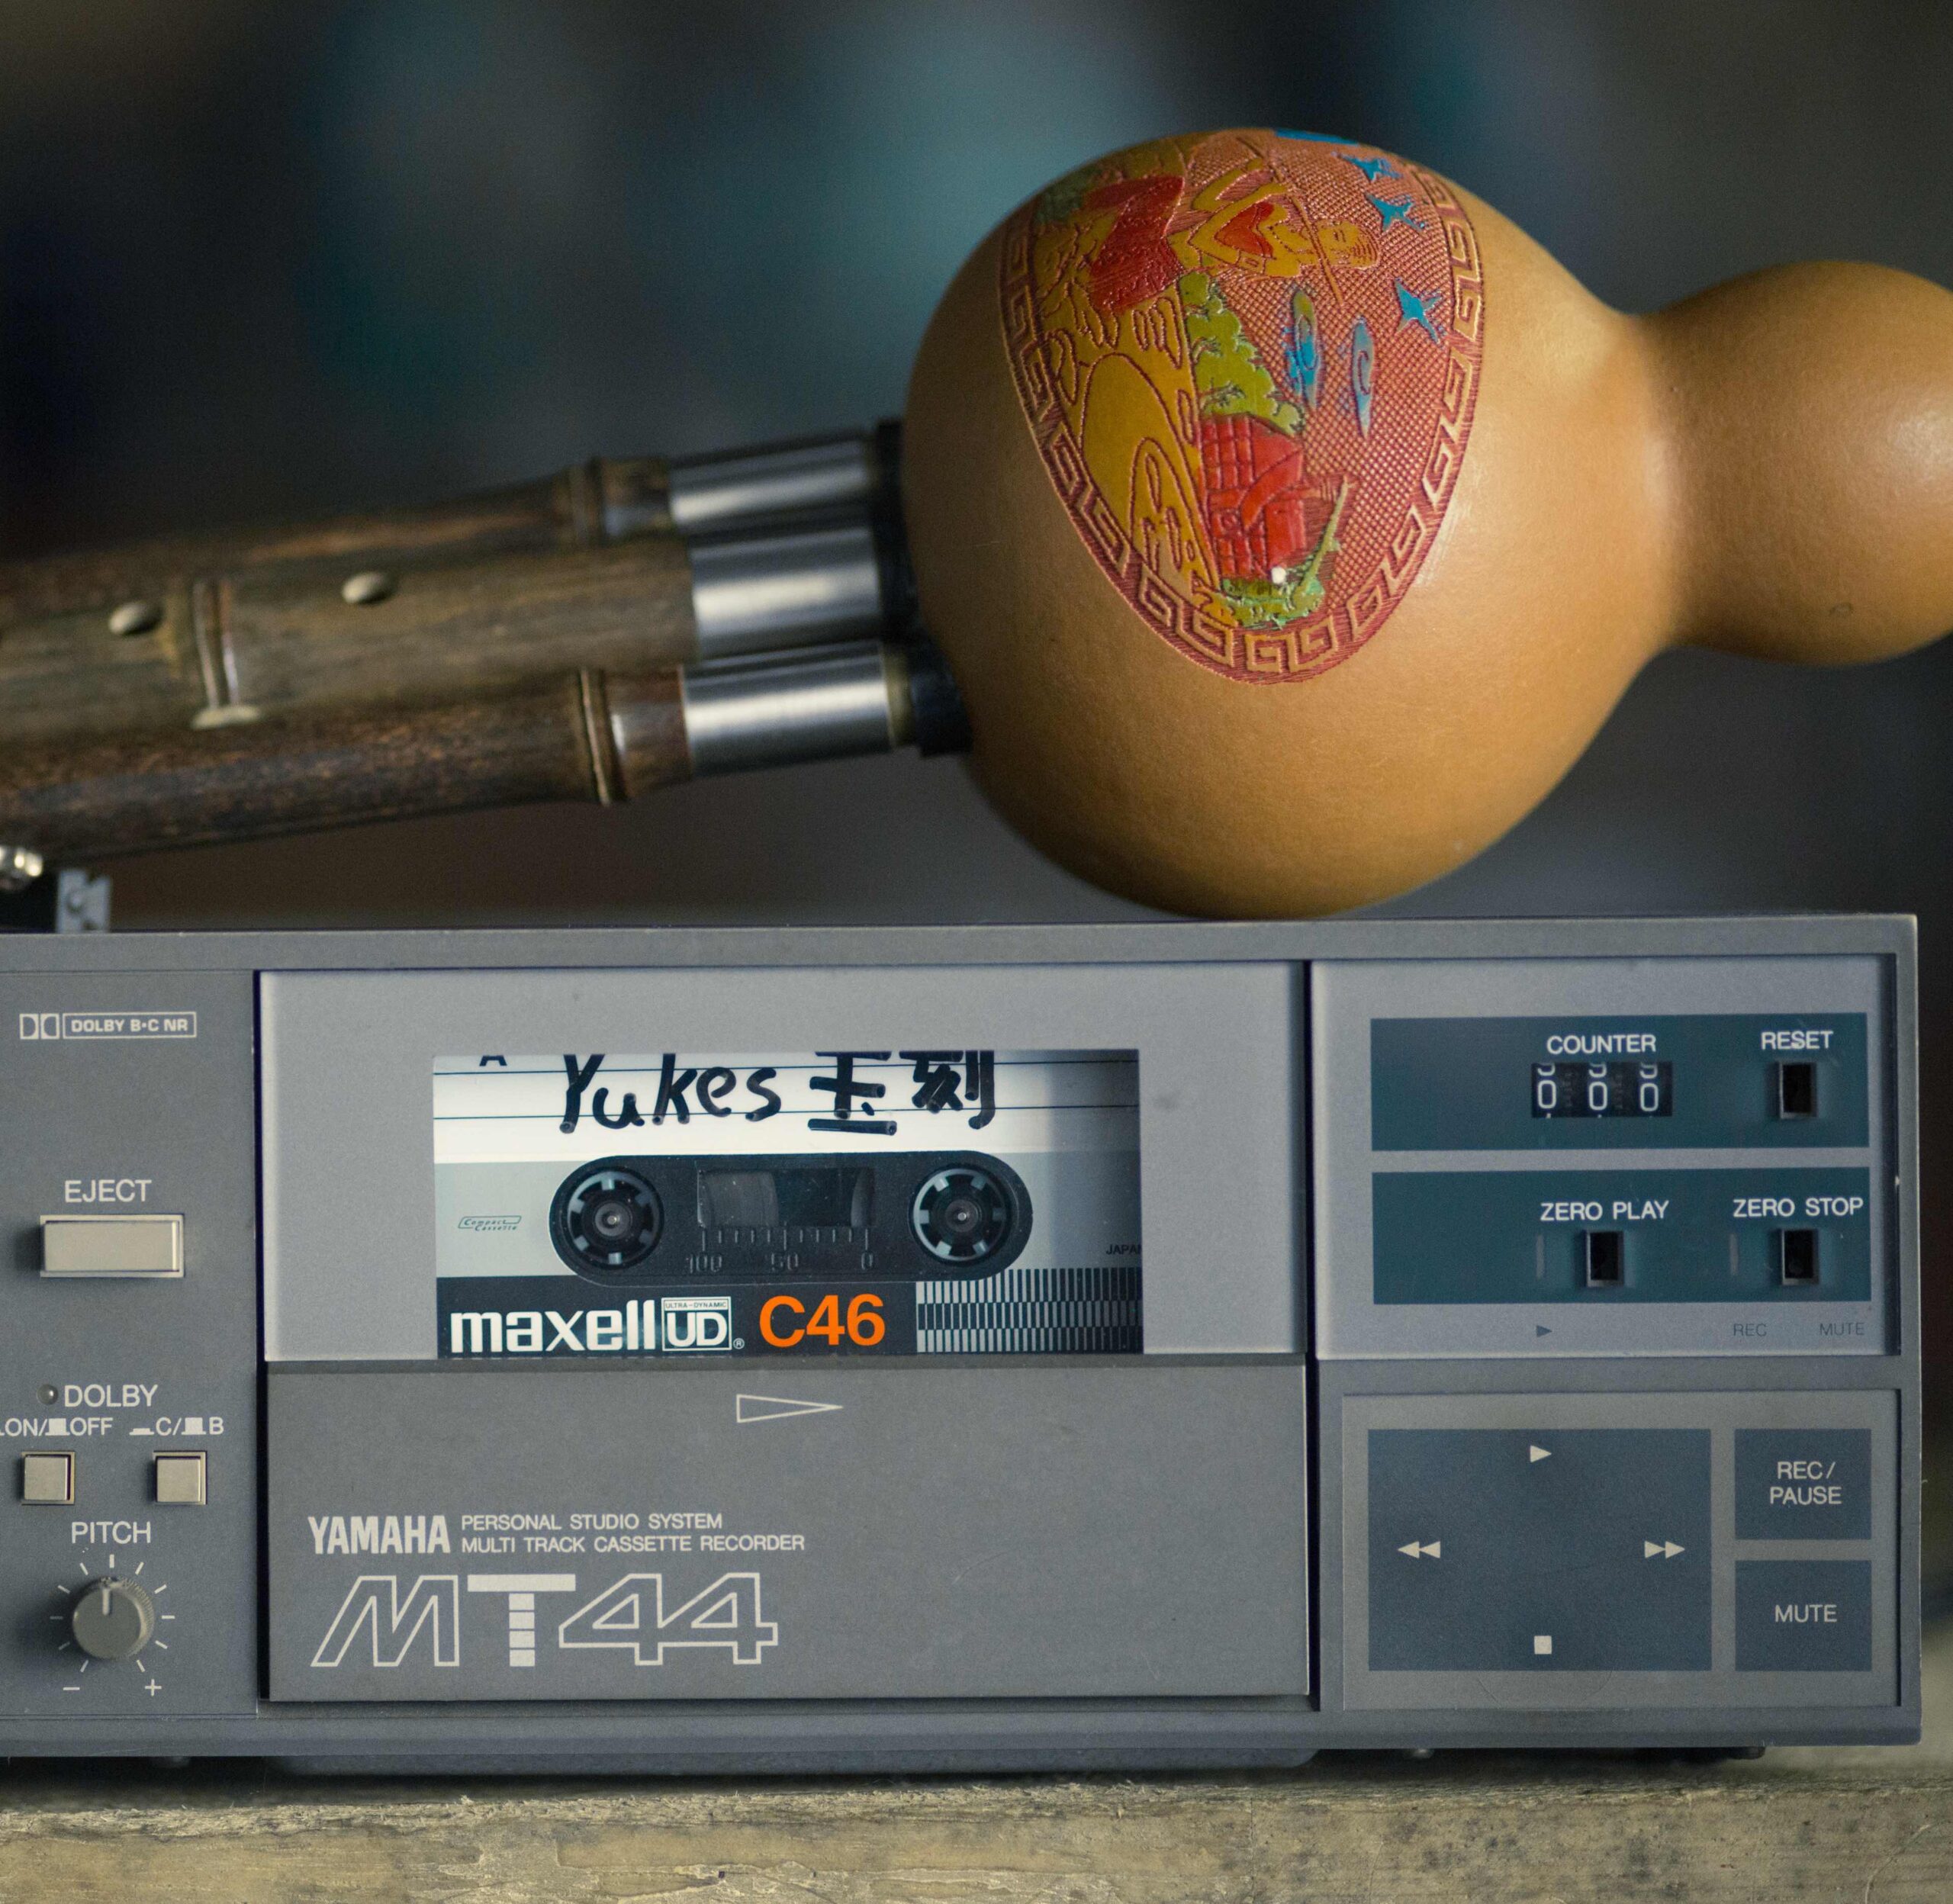 Yamaha MT44 cassette tape recorder